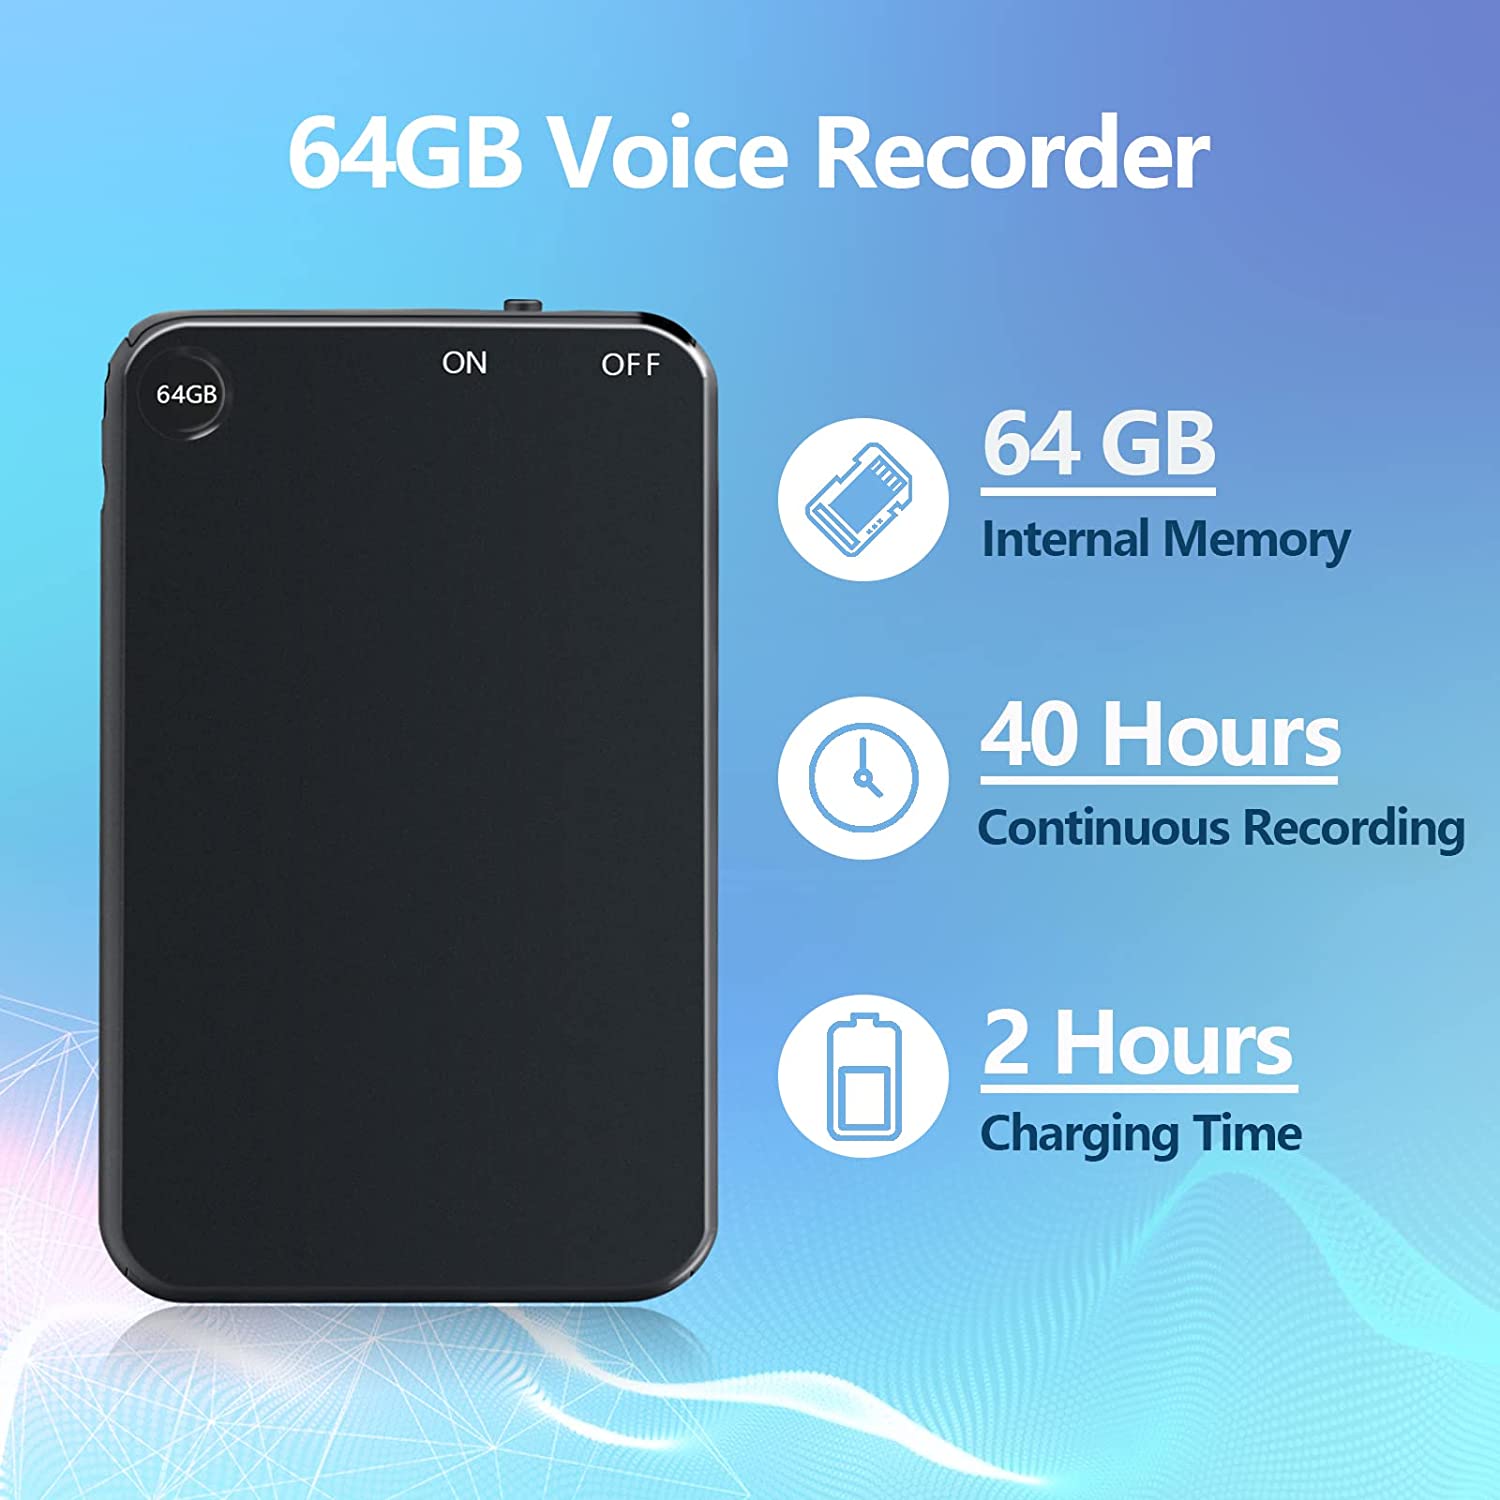 64GB Voice Recorder, Telele Audio Voice Recorder